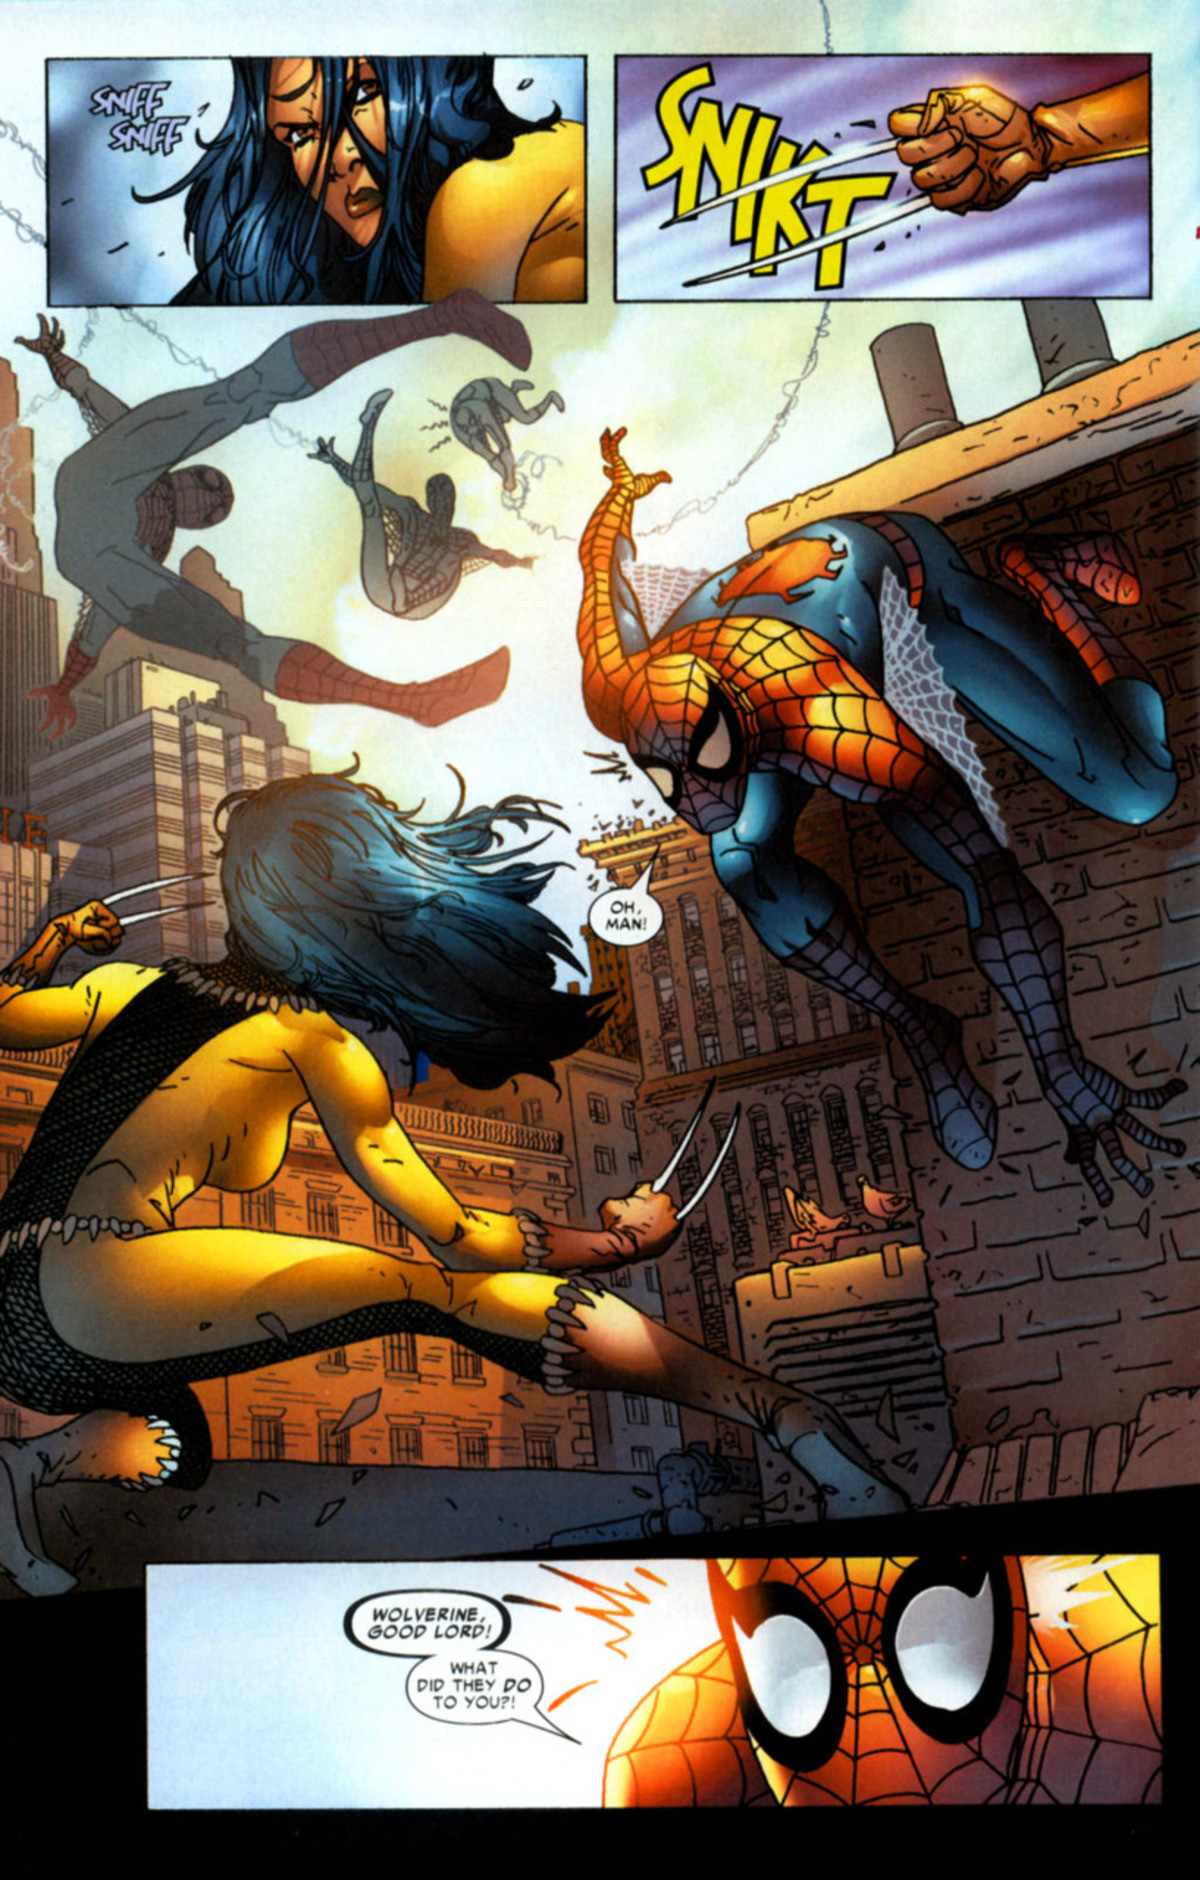 Spider-Man meets X-23